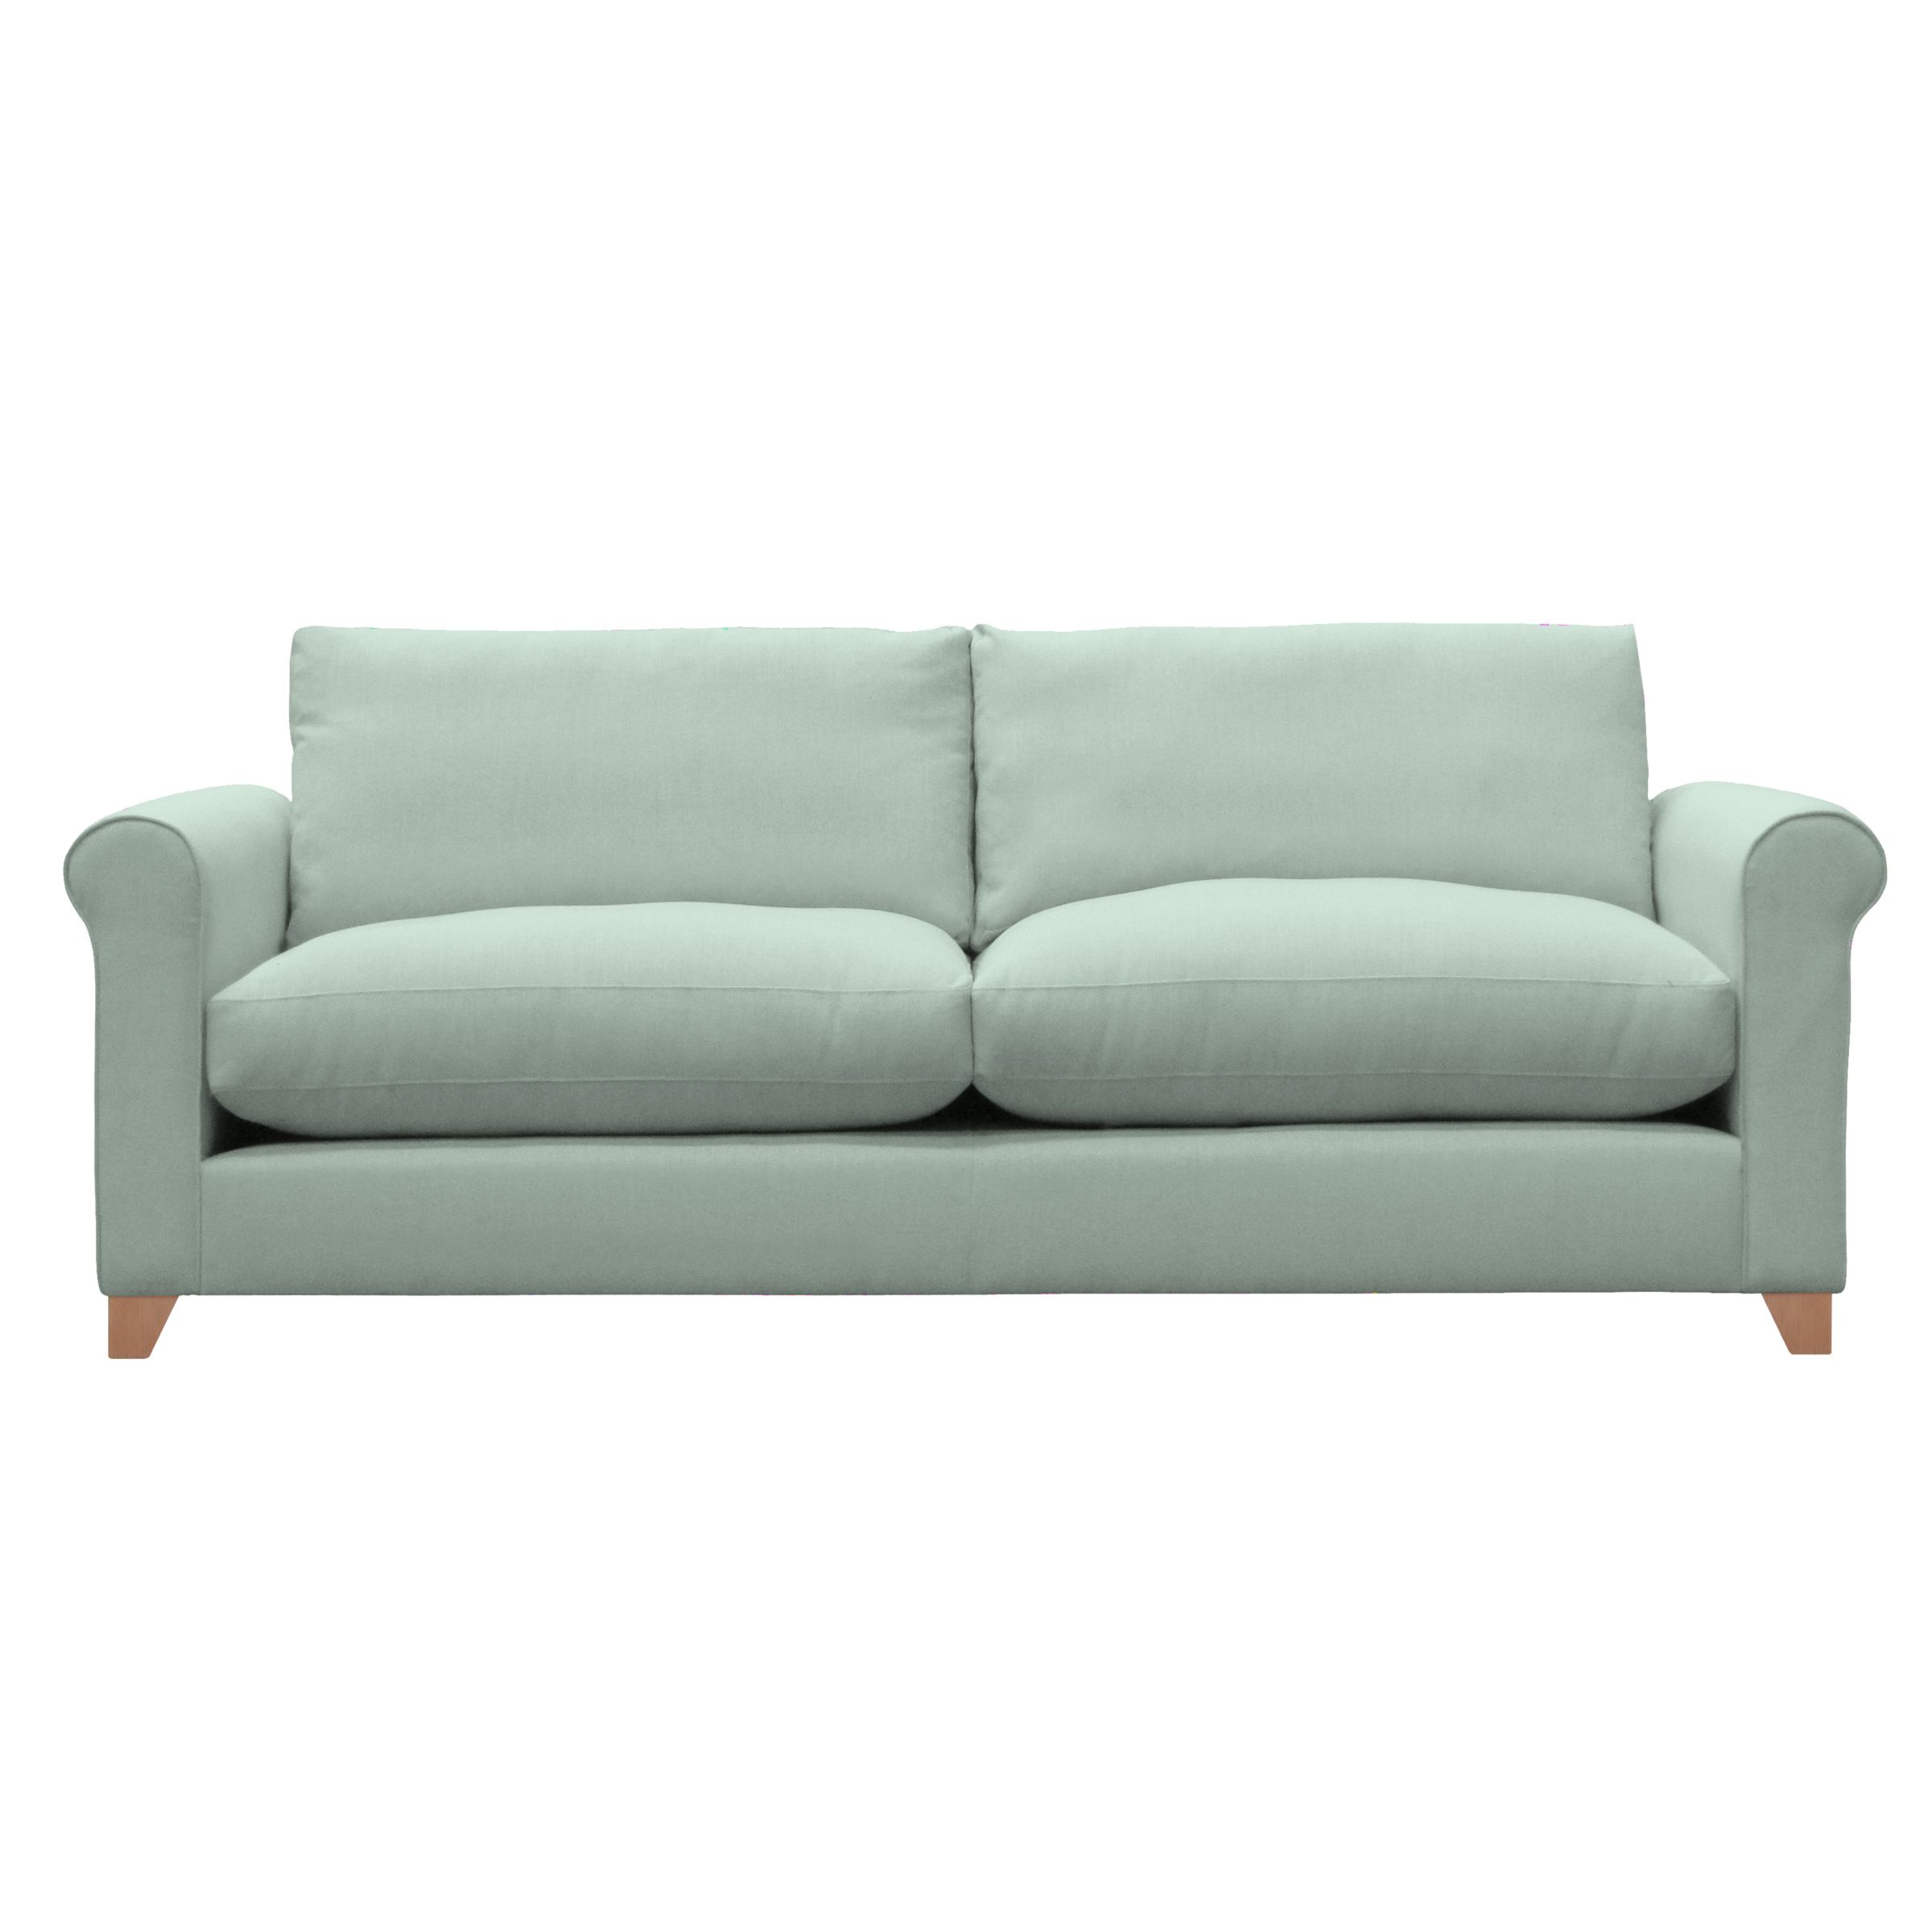 John Lewis Options Scroll Arm Grand Sofa, Eaton Duck Egg, width 217cm